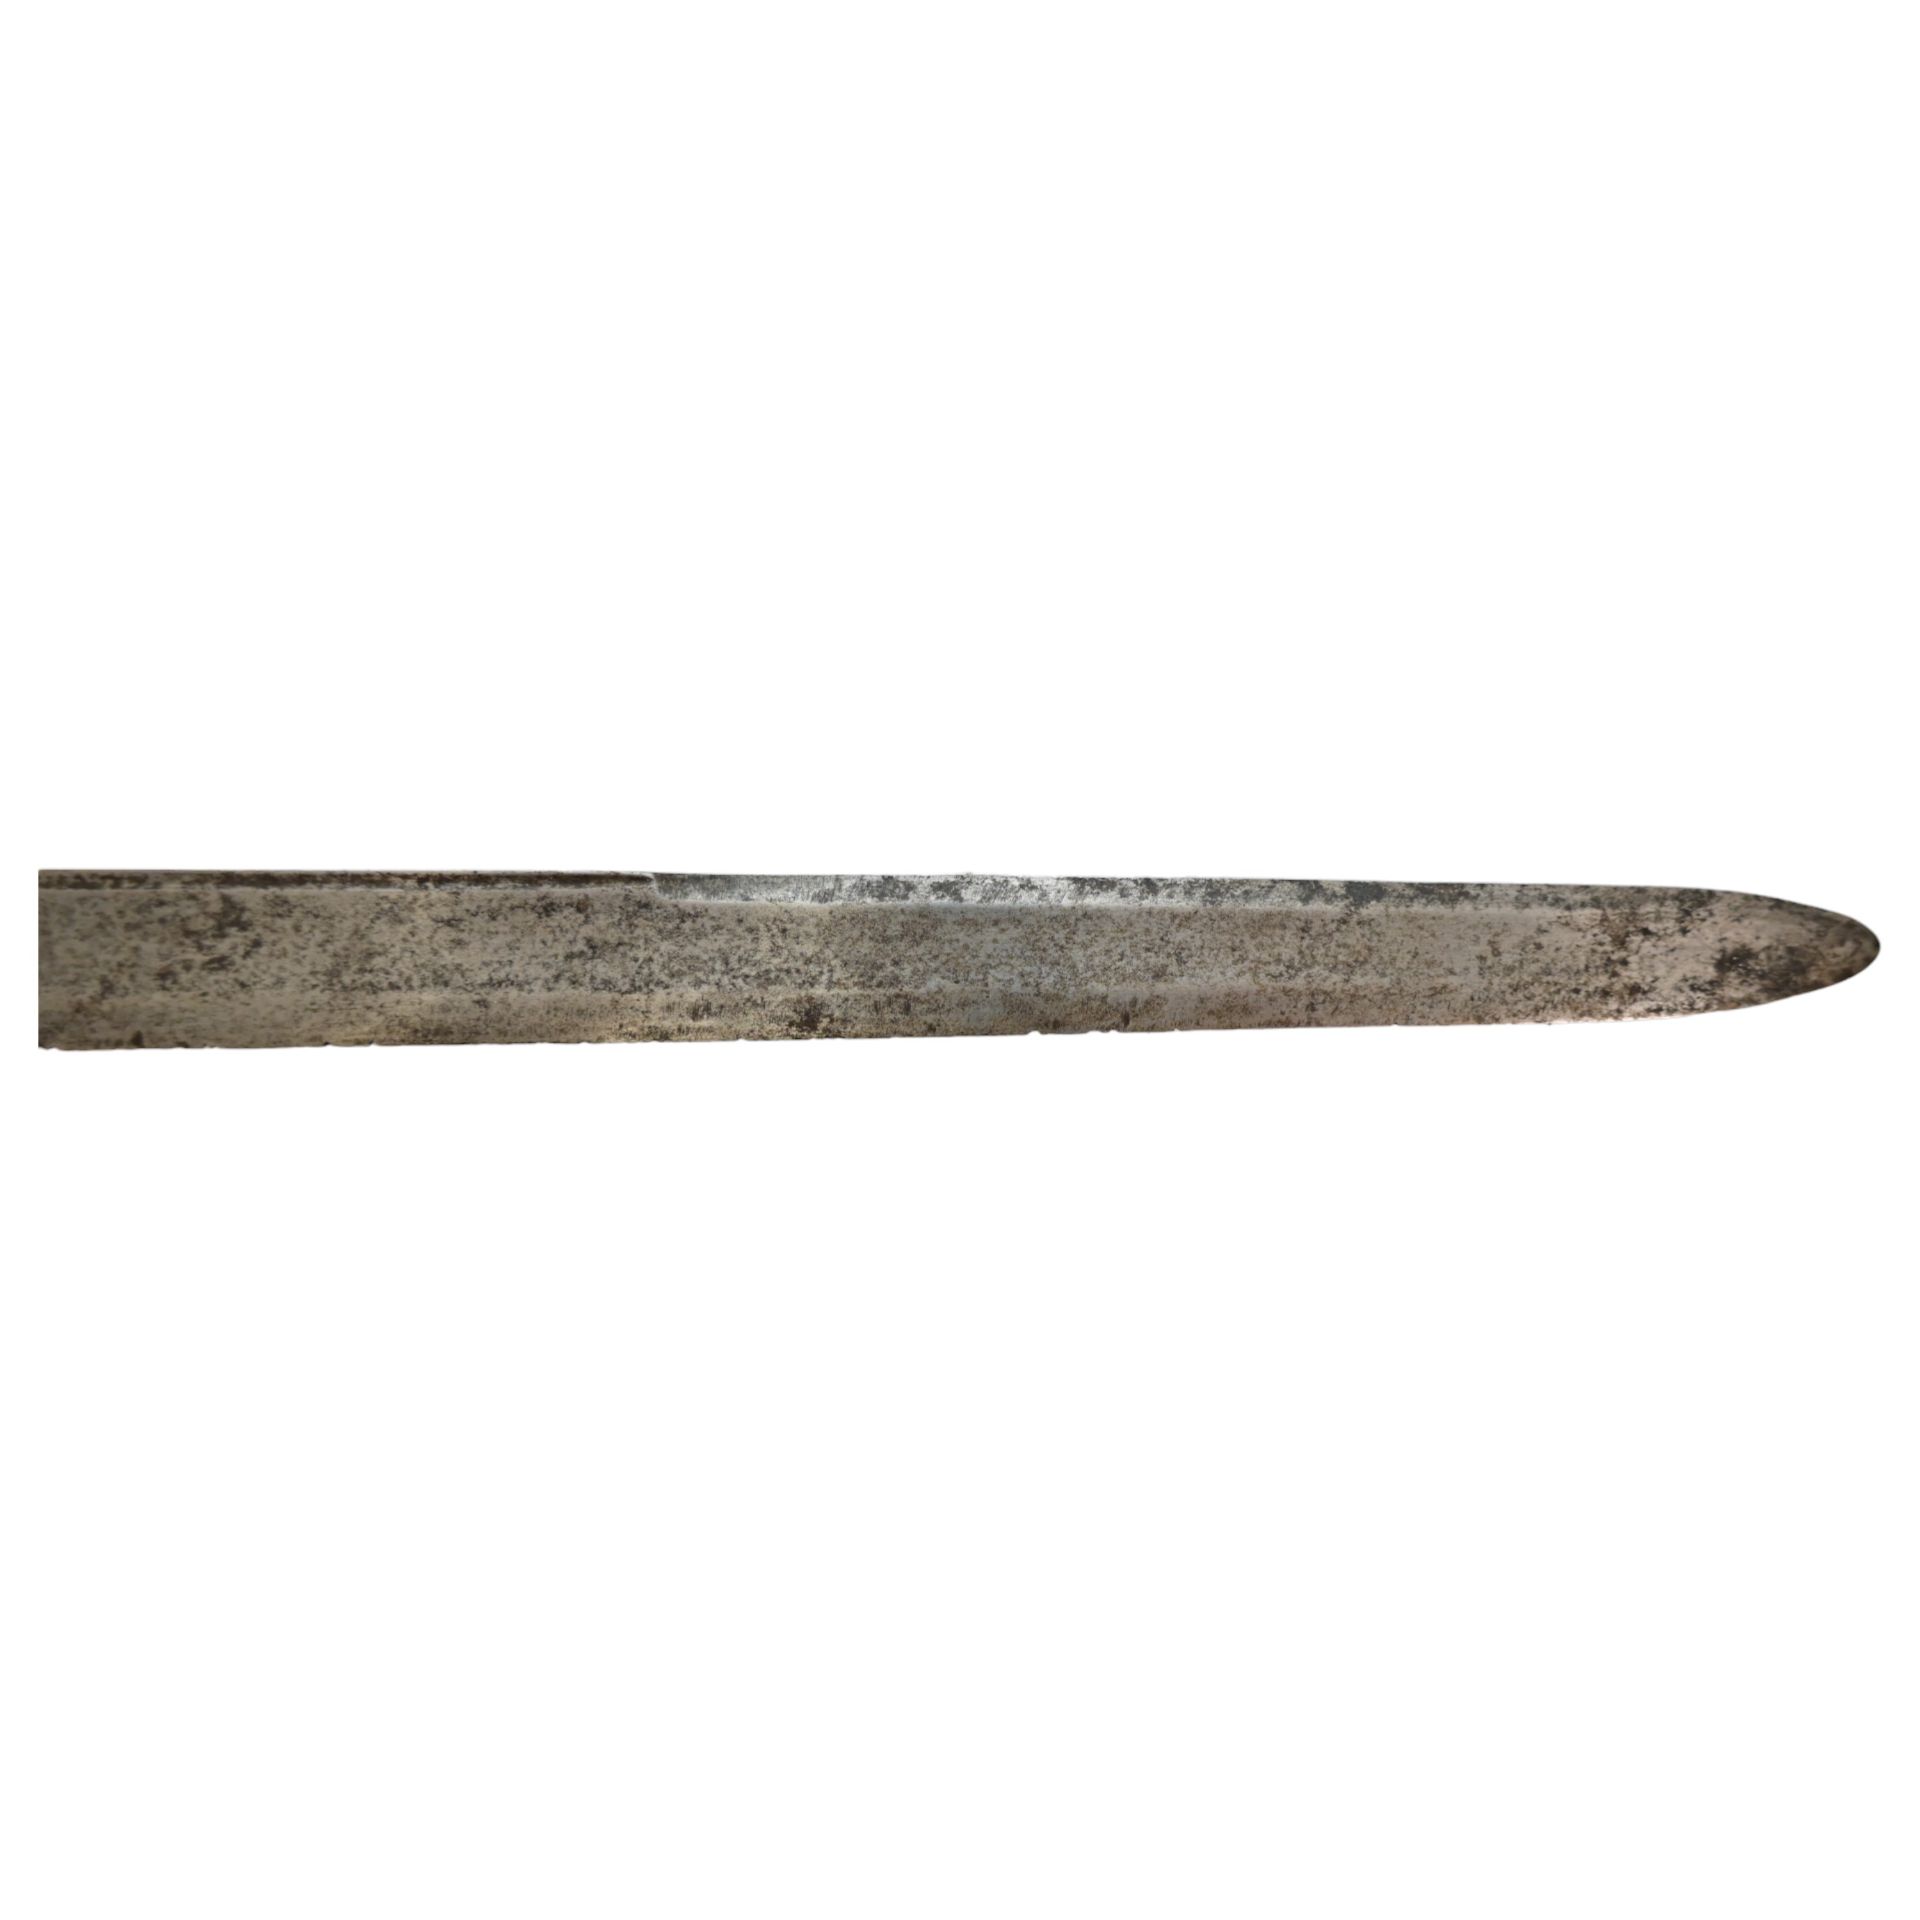 Rare Hunting Sword, 18th Century, Germany. - Image 6 of 12